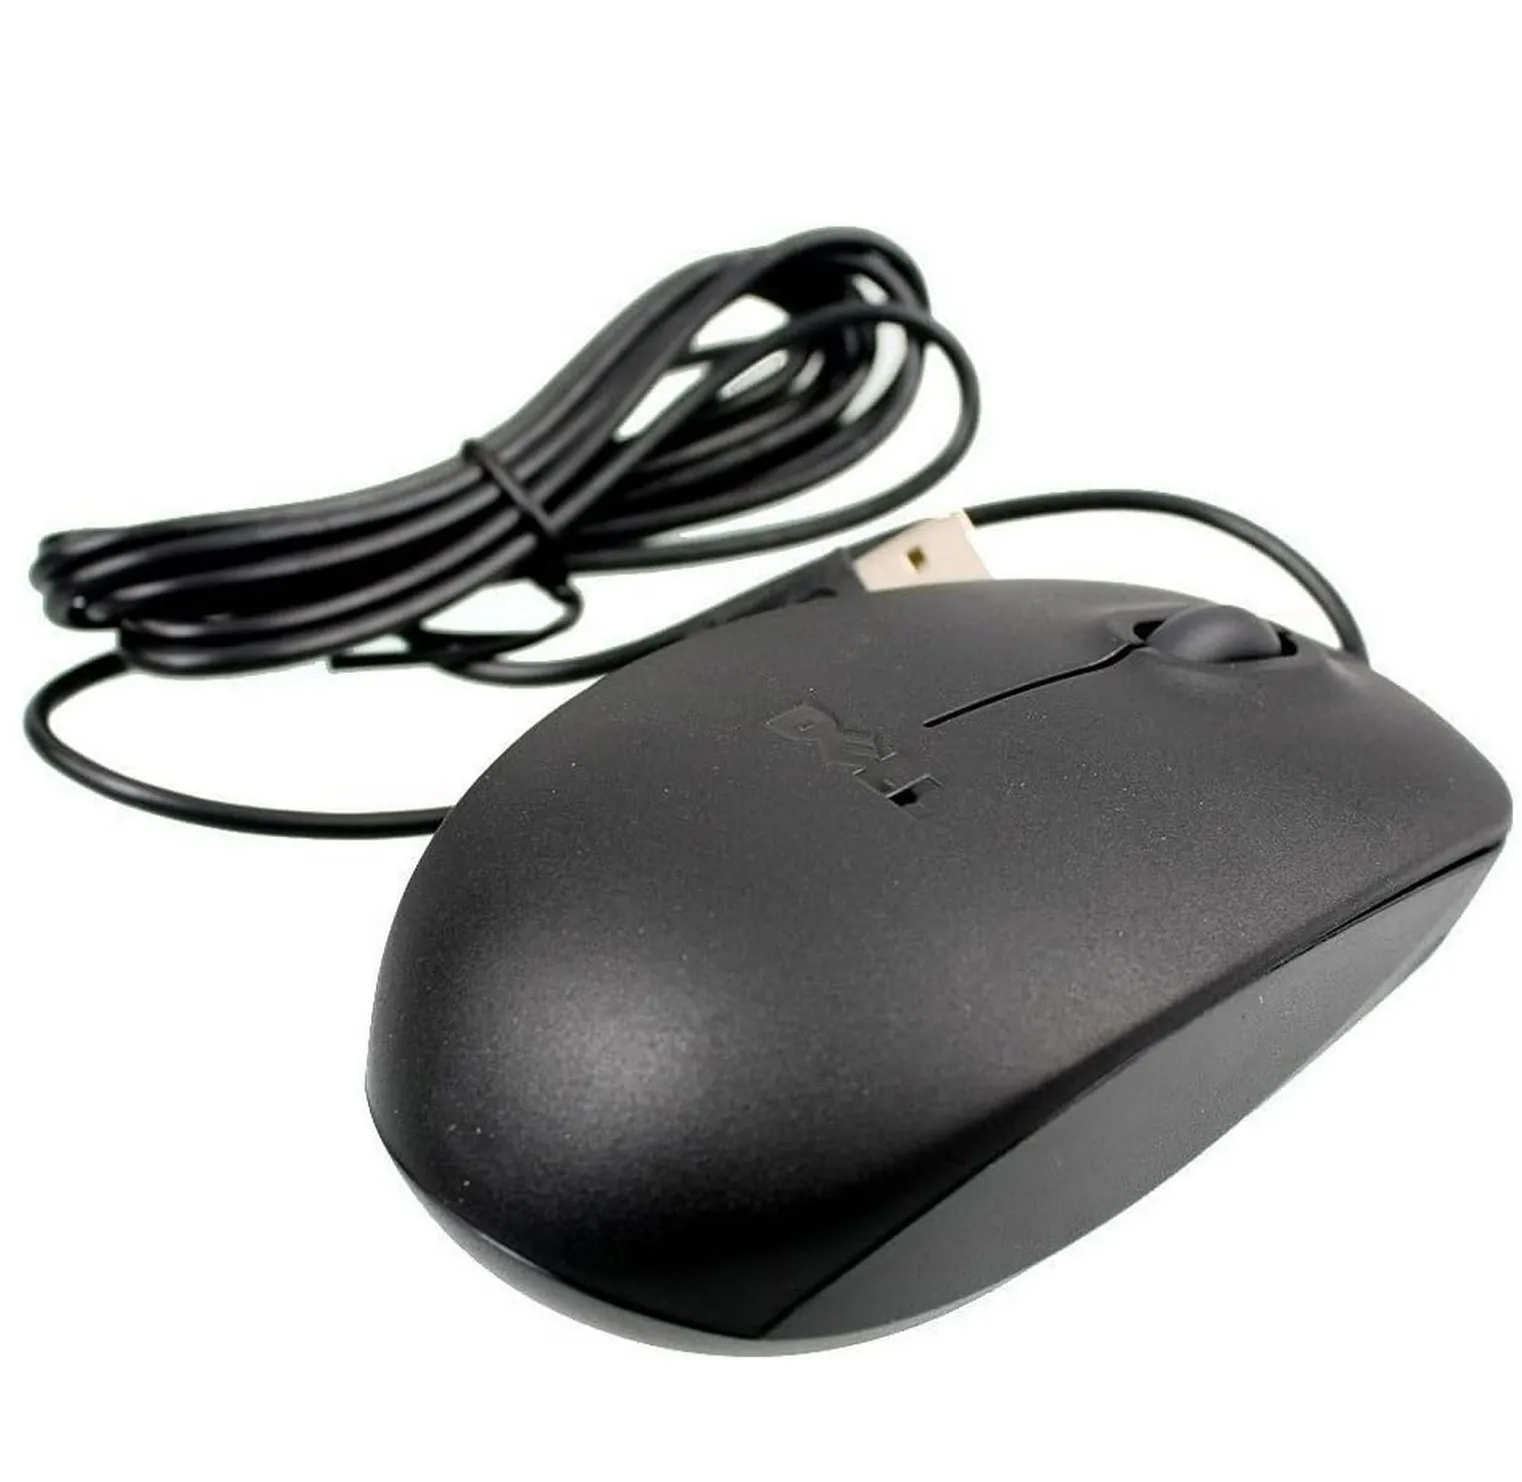 Mouse Cable Usb Optical Ms111 Diseño 1000dpi Negro